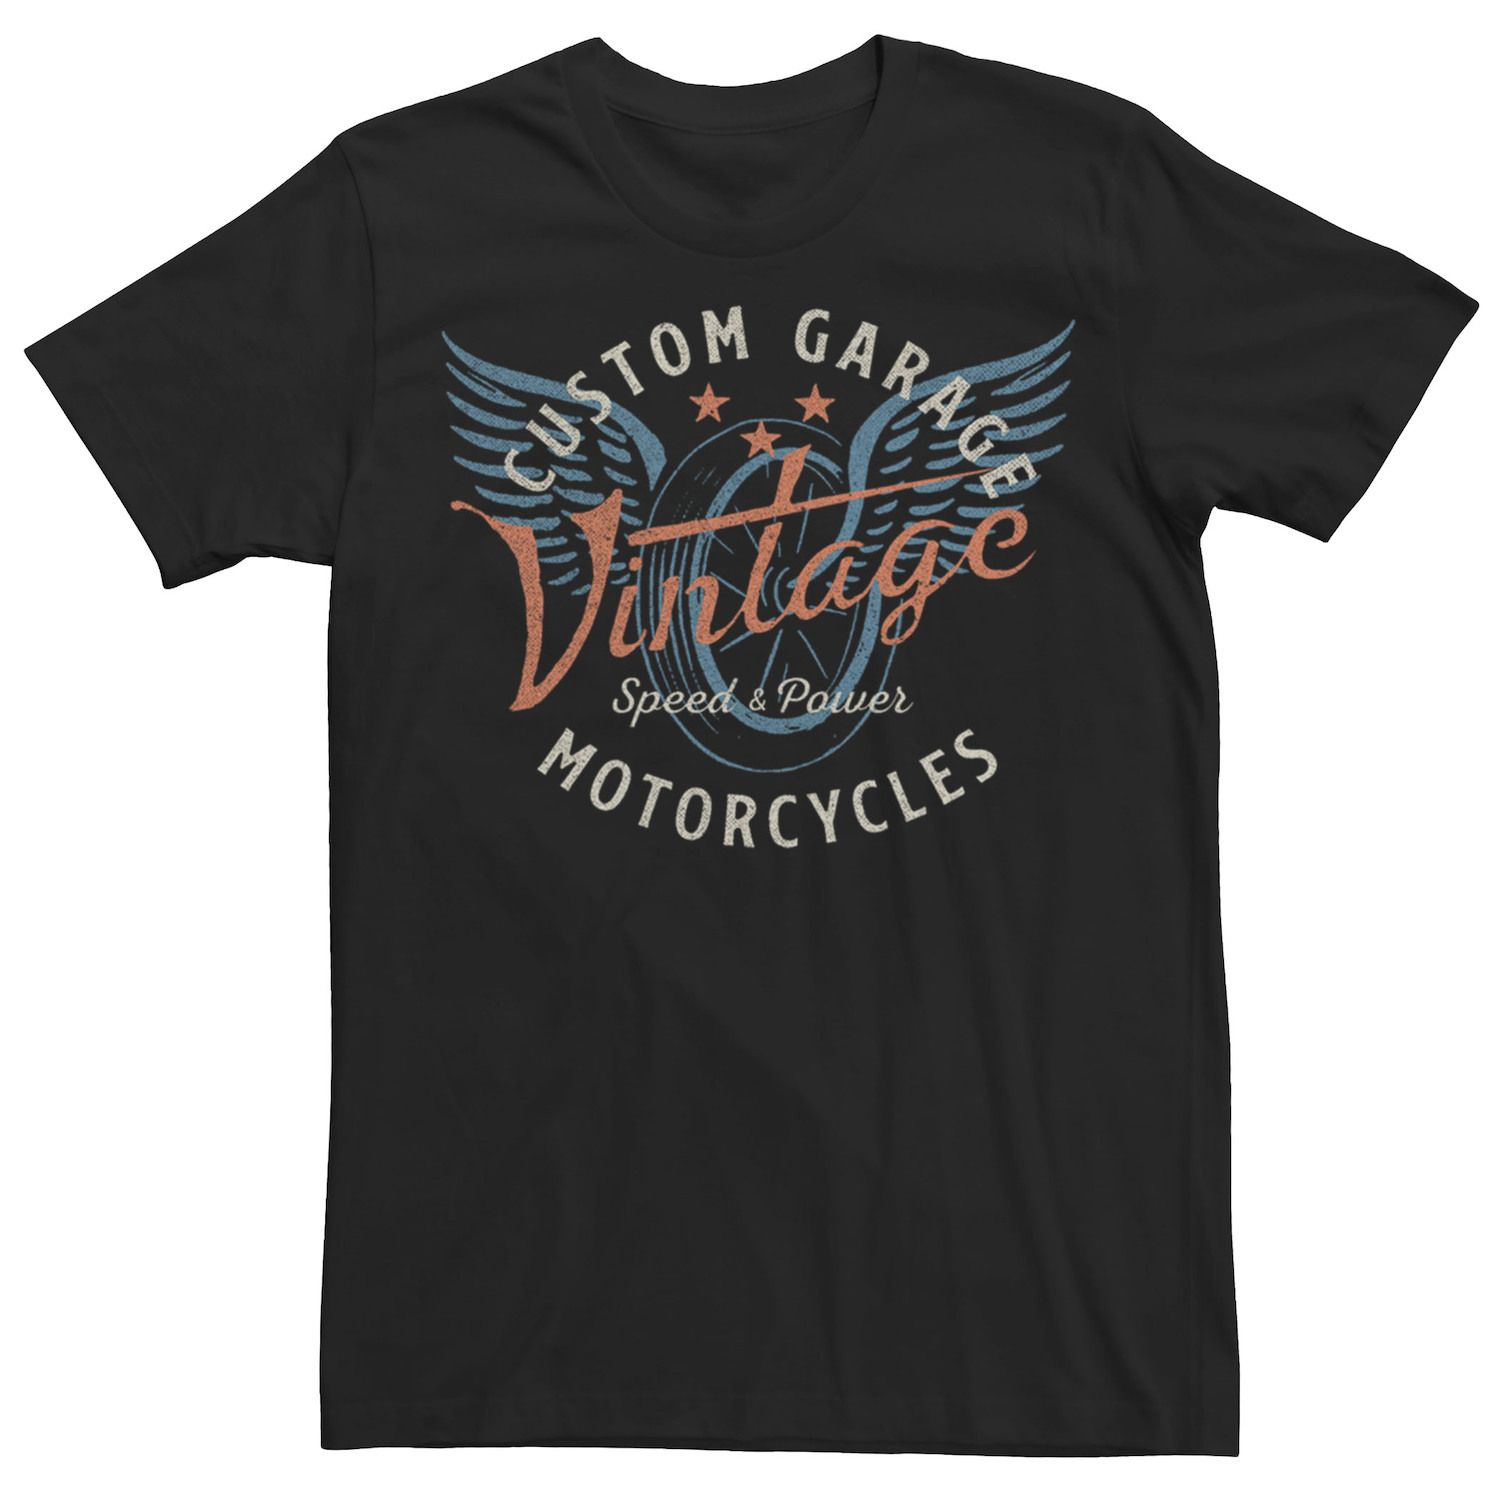 Мужская футболка с логотипом Garage Vintage Motorcycles на заказ Licensed Character